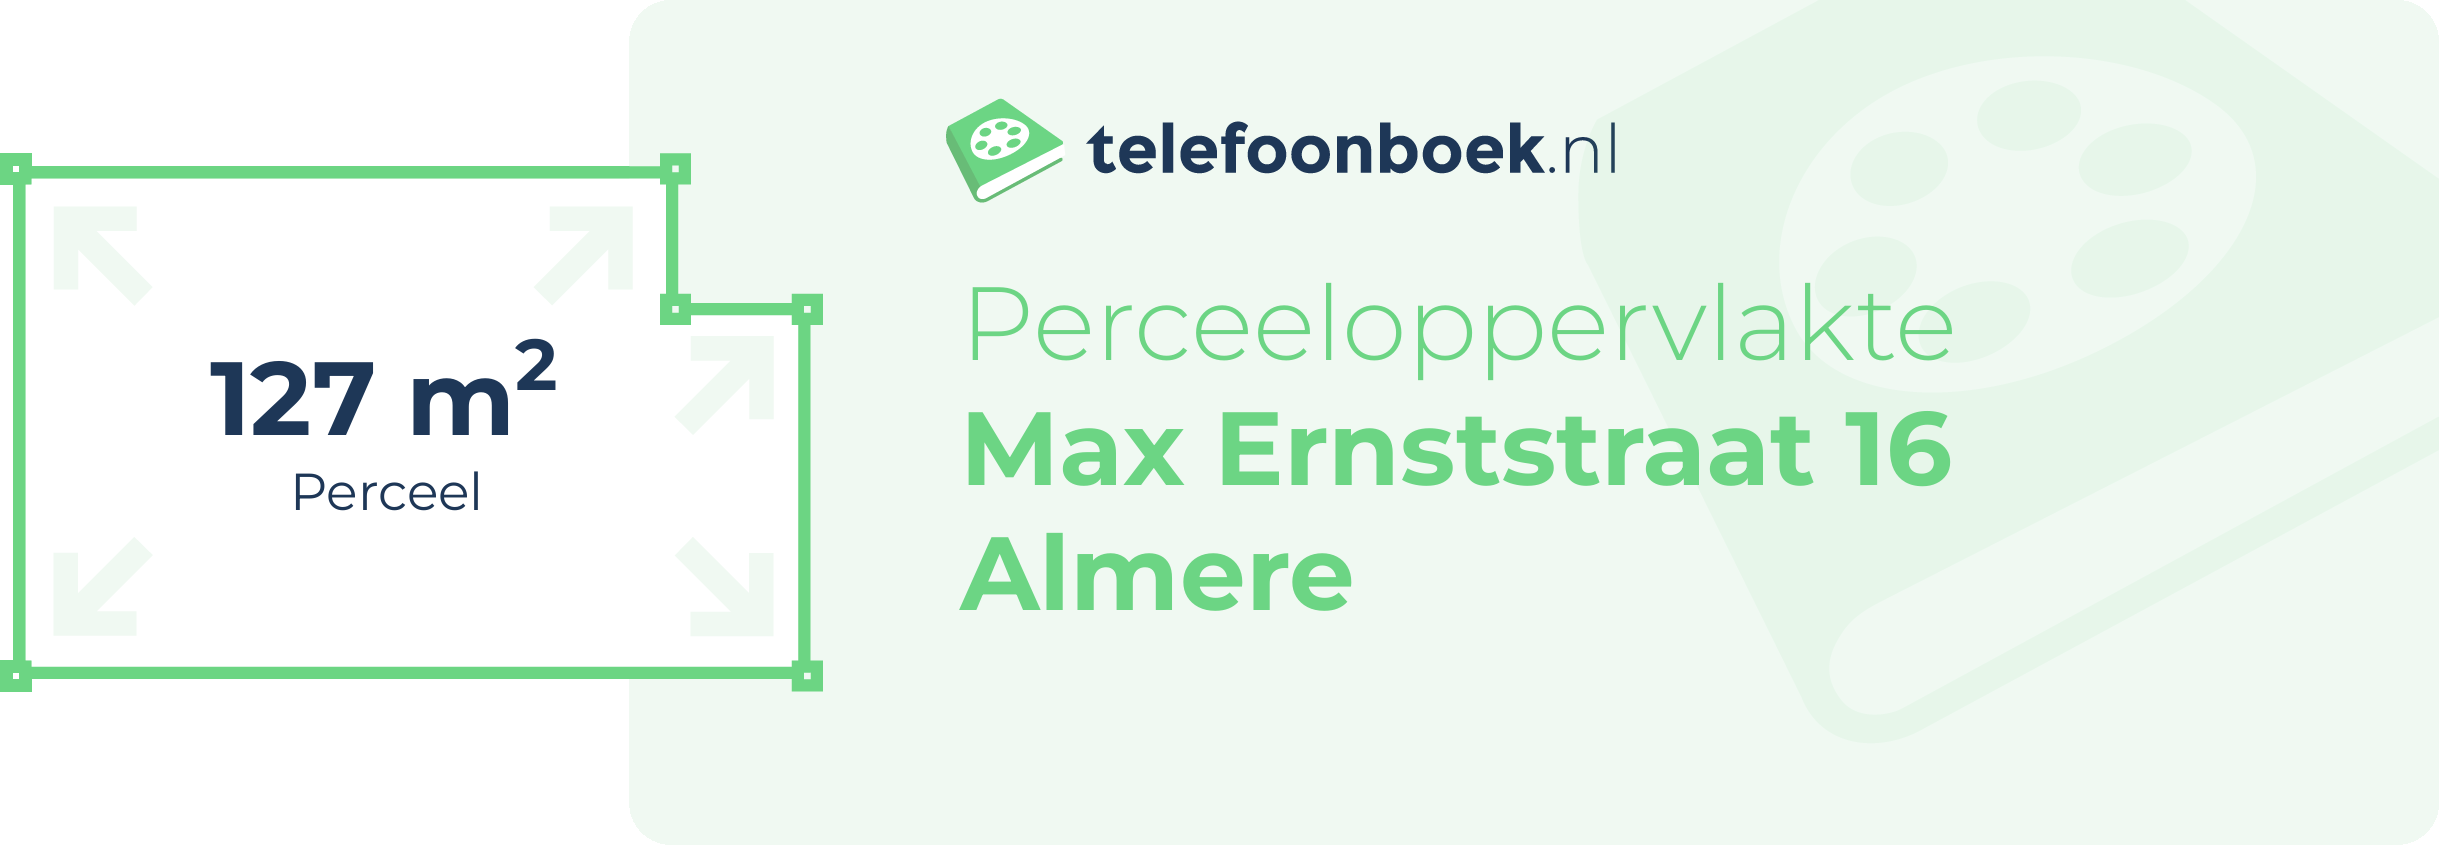 Perceeloppervlakte Max Ernststraat 16 Almere